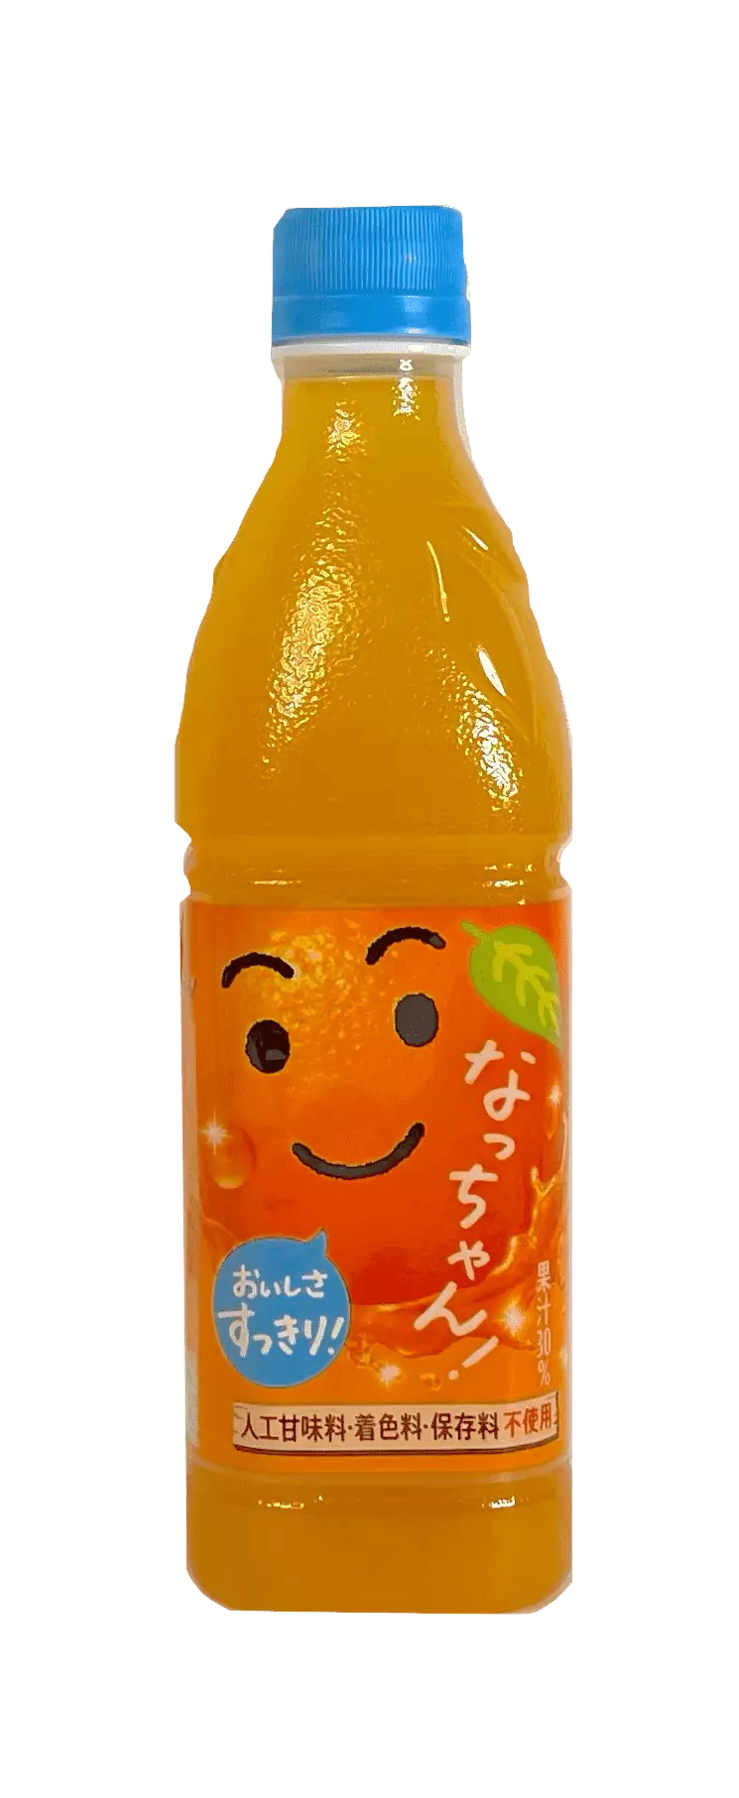 Nacchan Orange 425ml Japan